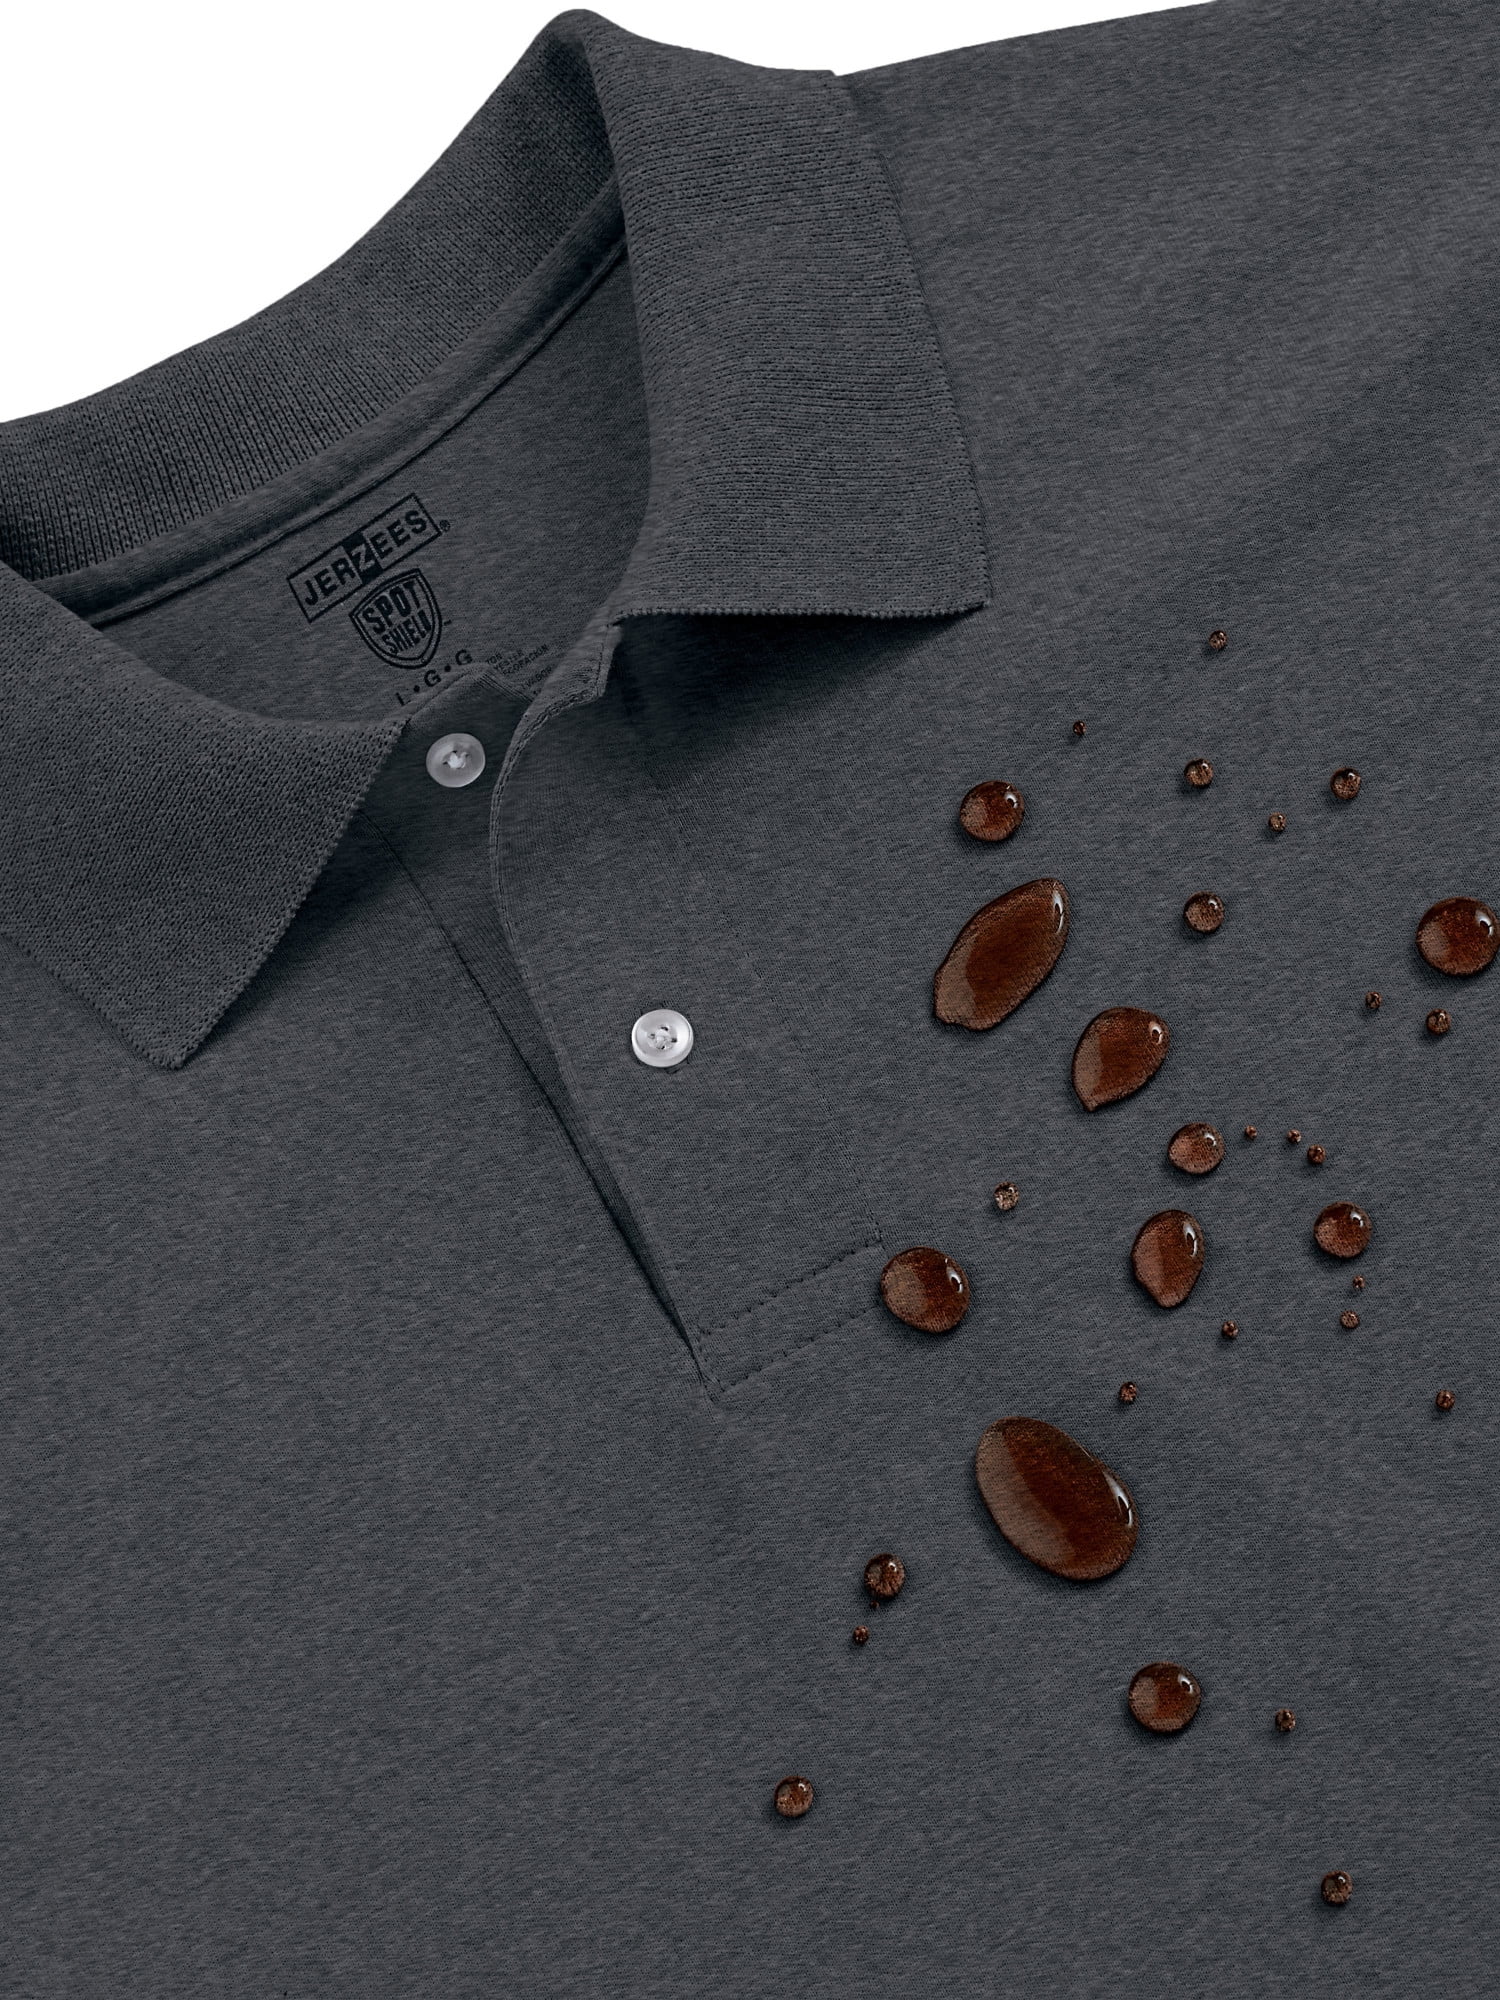 Jerzees Men's Spotshield Long Sleeve Polo Shirt   Walmart.com